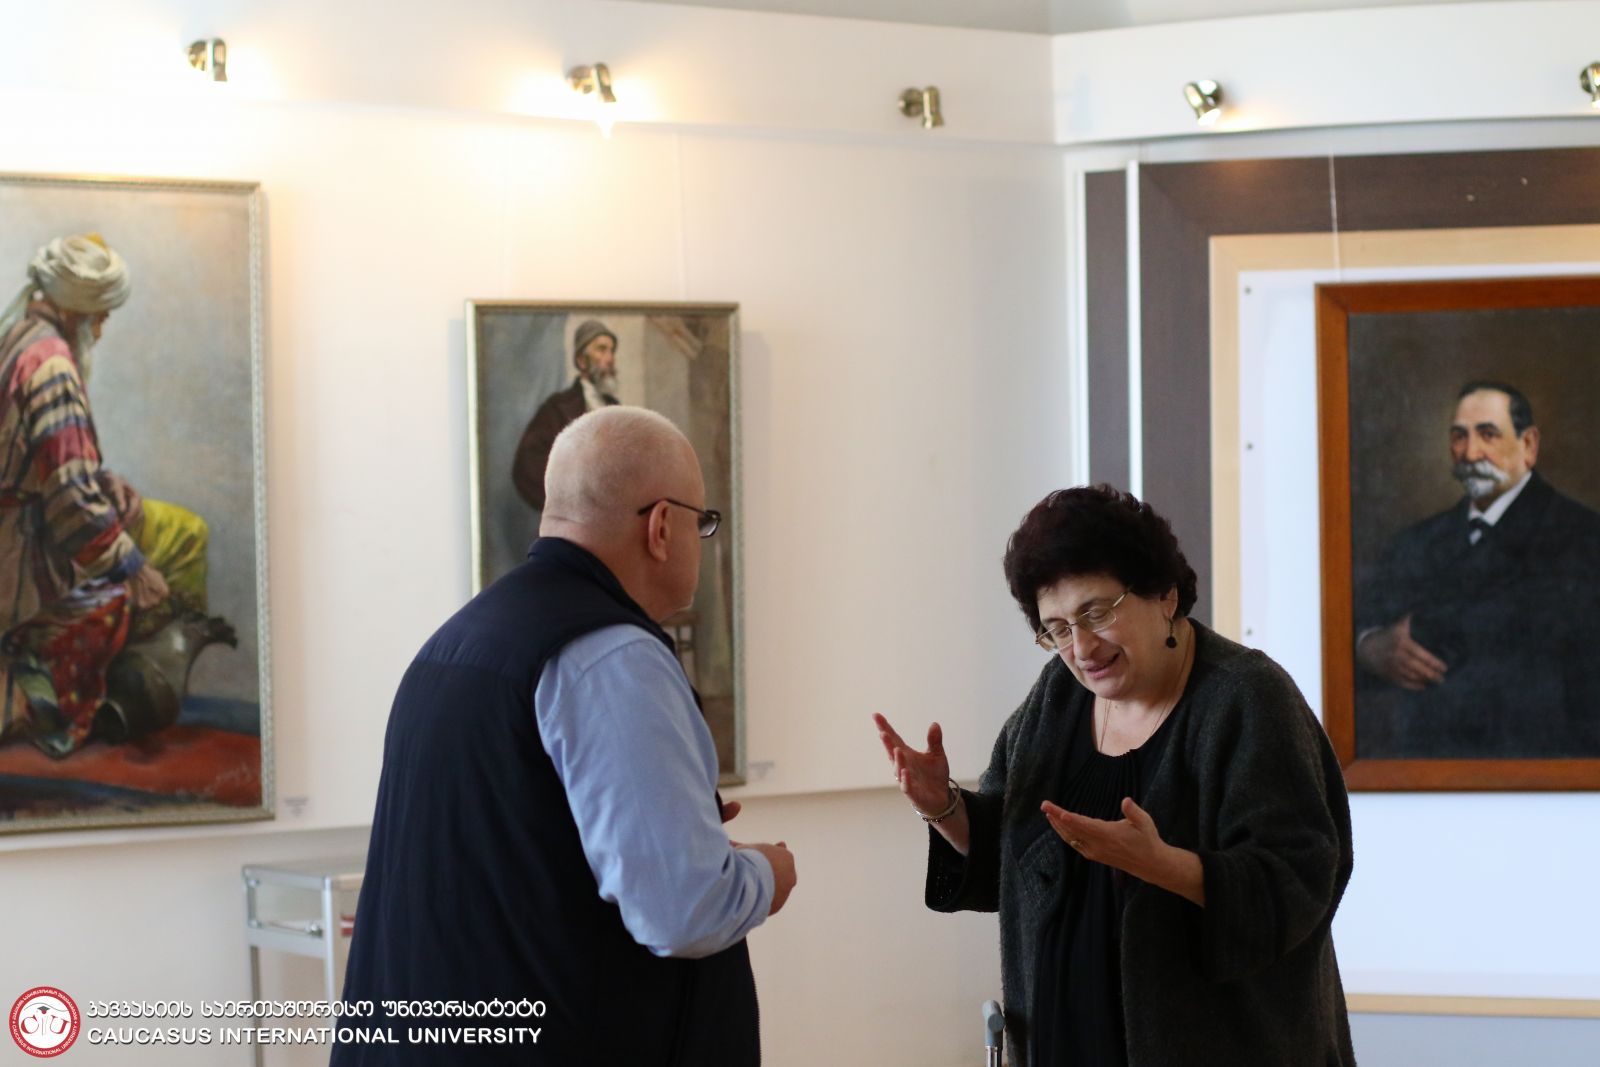 Film Presentation Held at Ilia Chavchavadze Kvareli State Museum